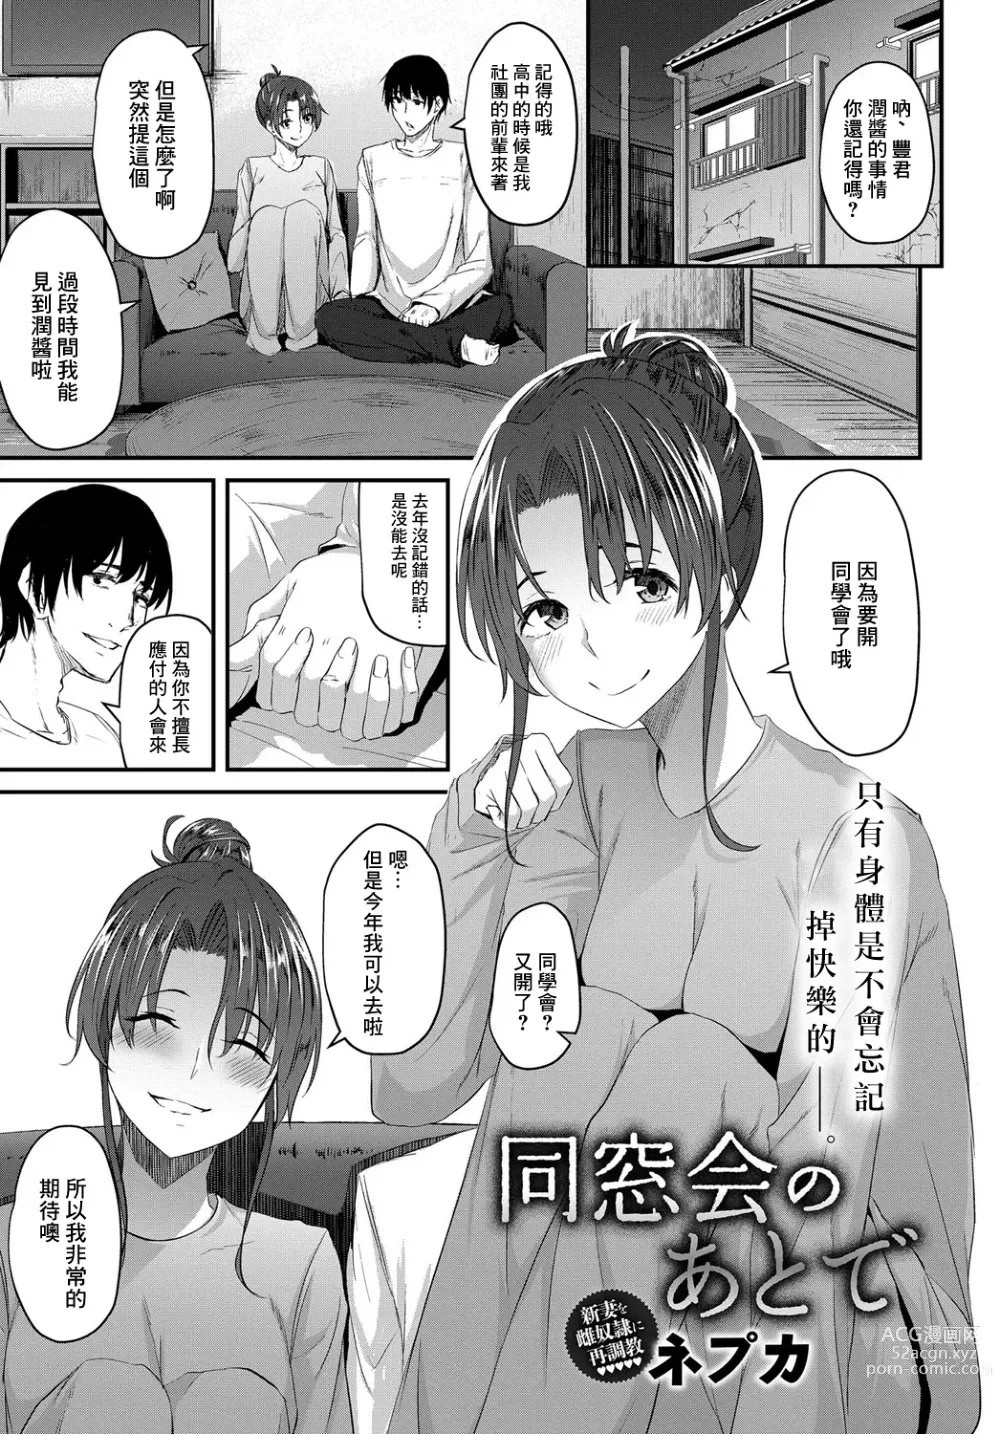 Page 1 of manga Dousoukai no Ato de